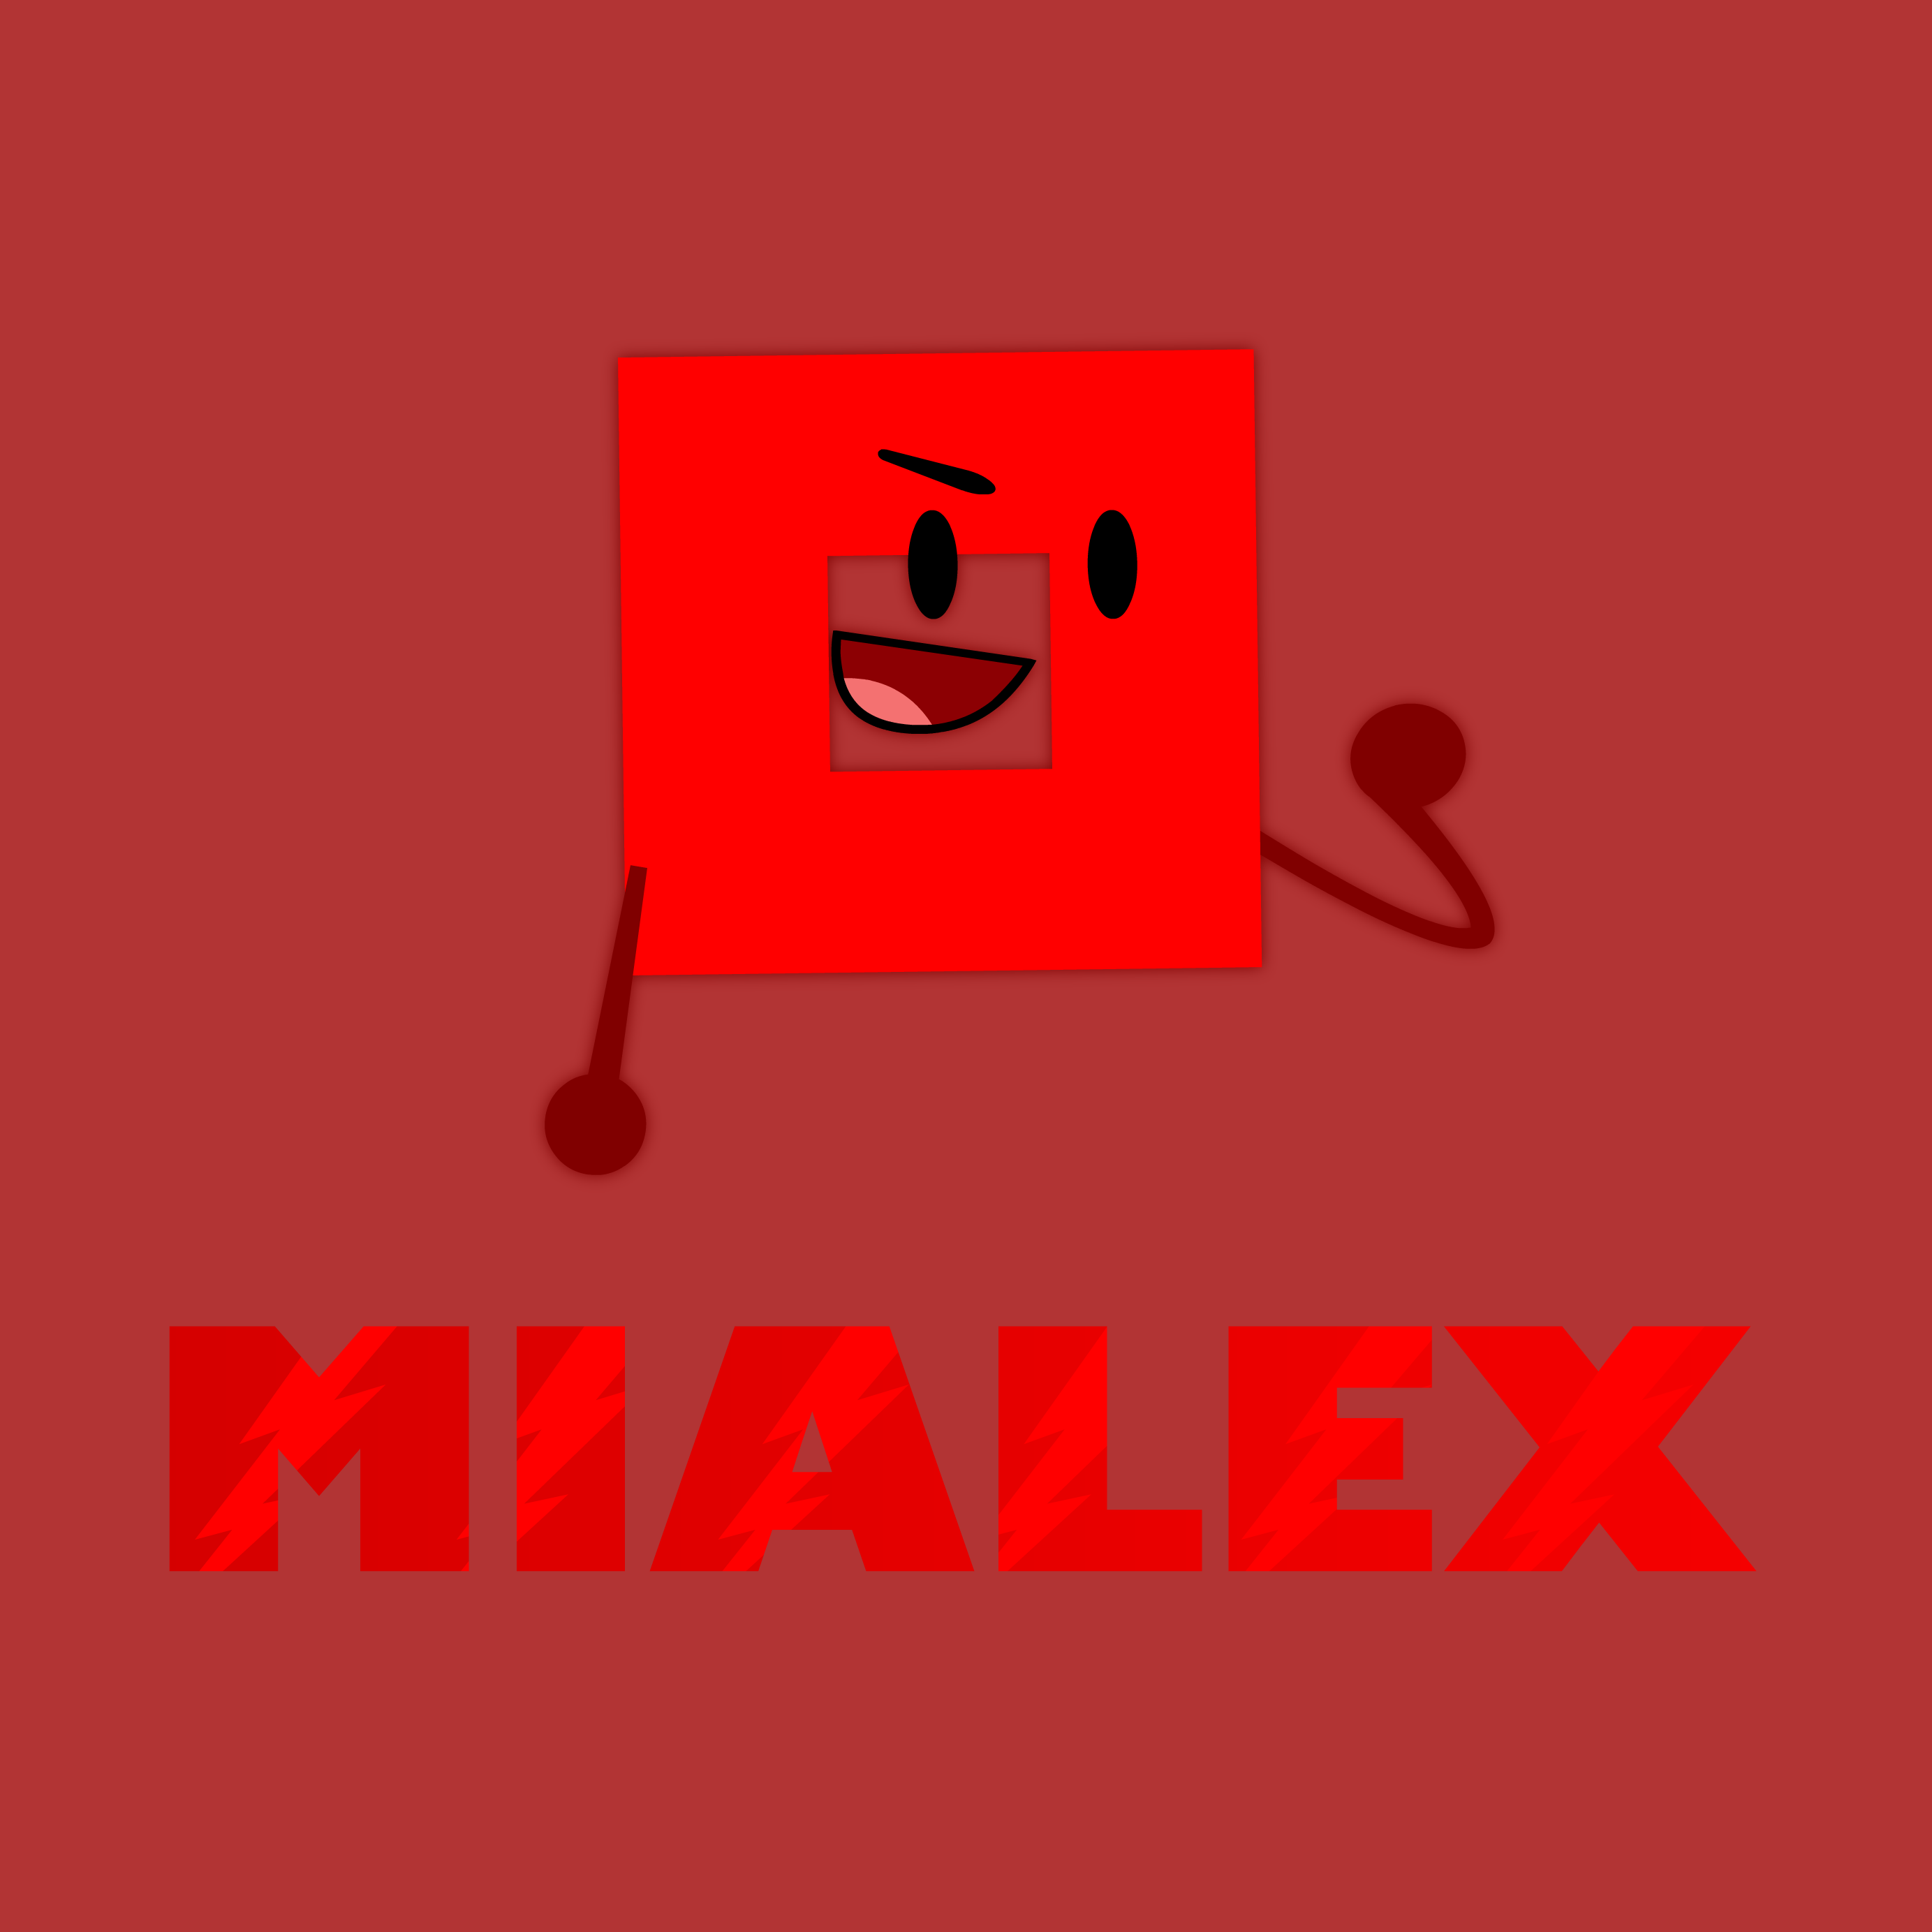 Mialex, Sparta Remix Wiki